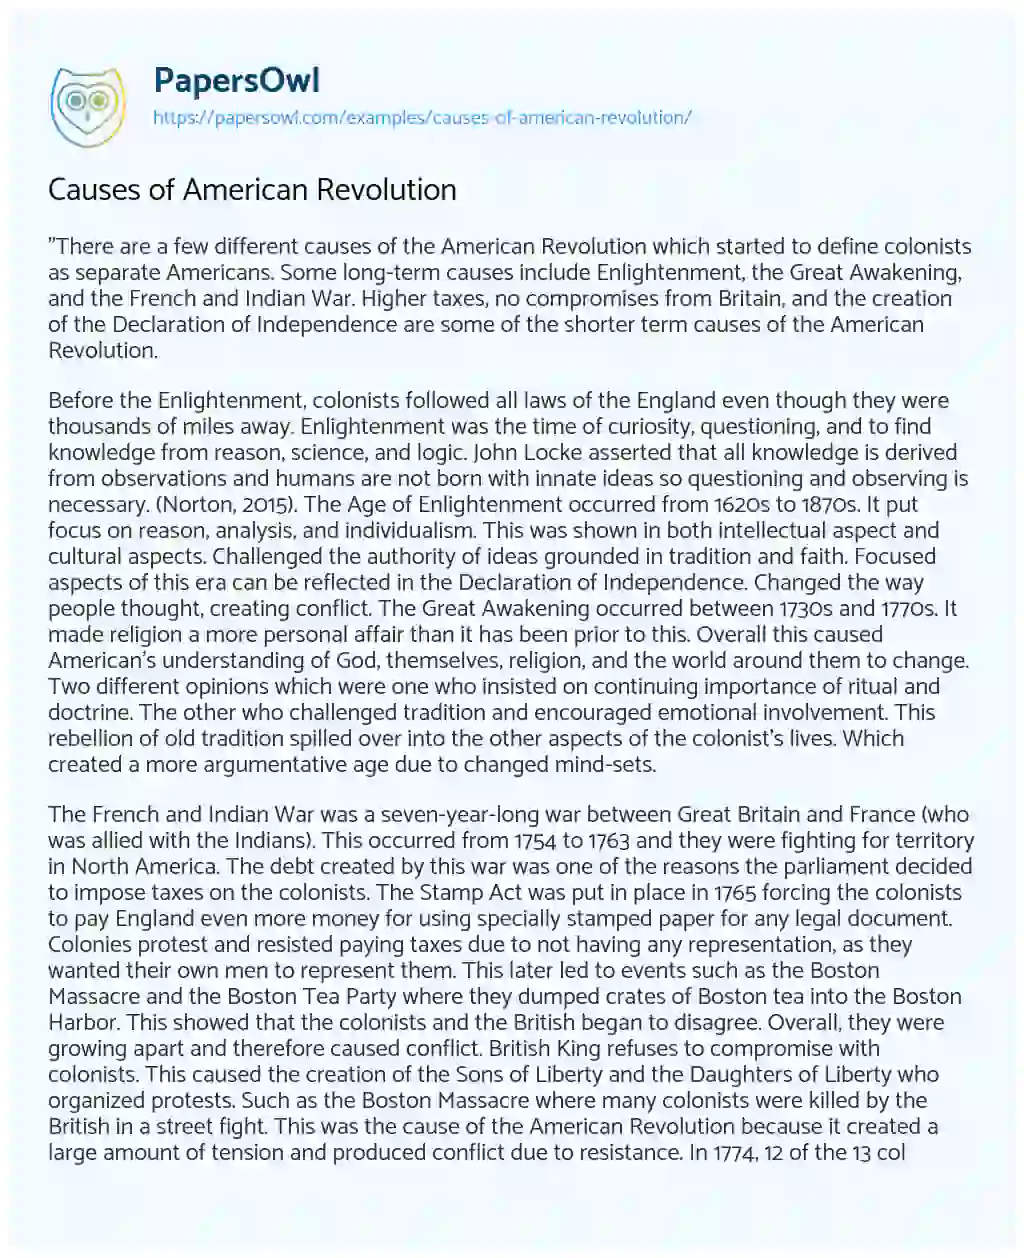 Essay on Causes of American Revolution